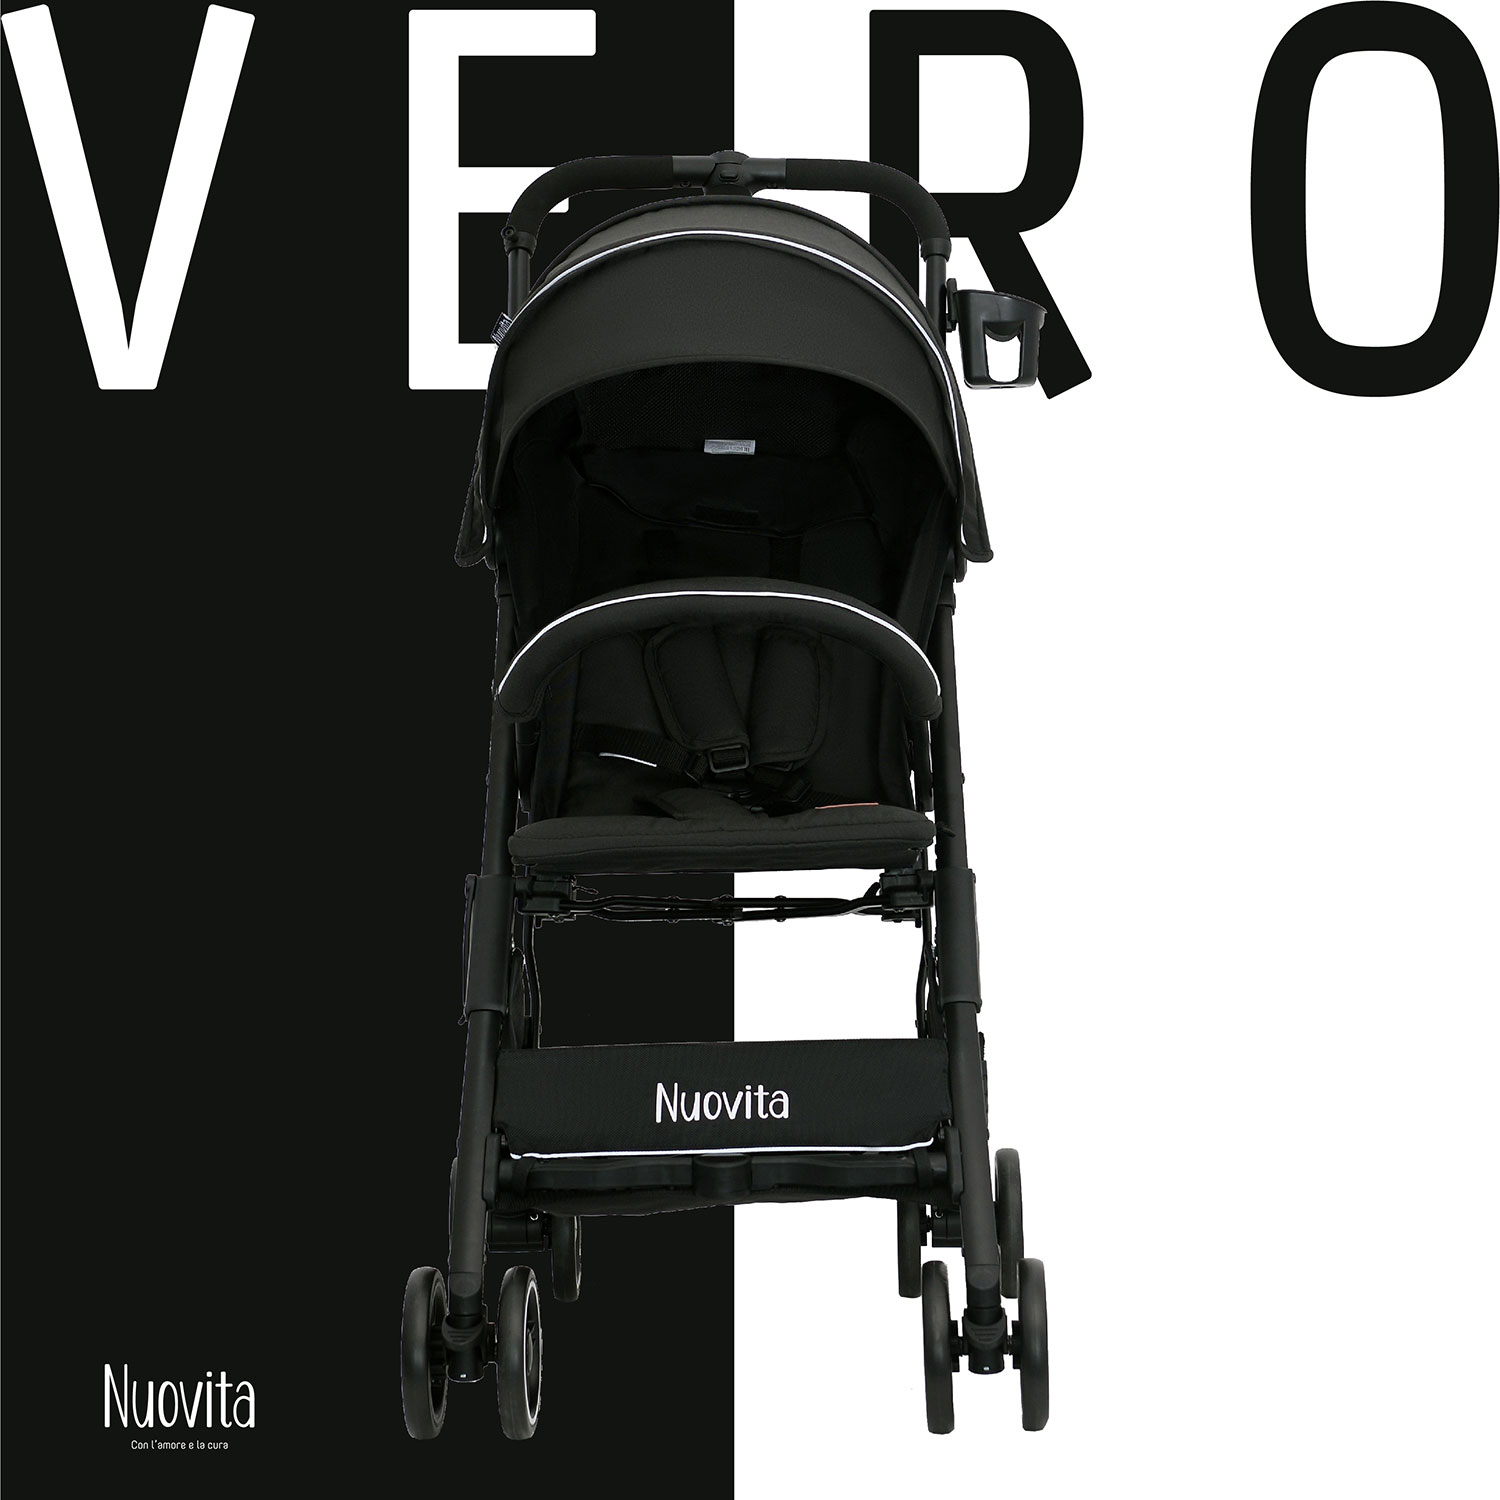 Прогулочная коляска Nuovita Vero Nero Черный прогулочная коляска nuovita giro arancio nero оранжевый